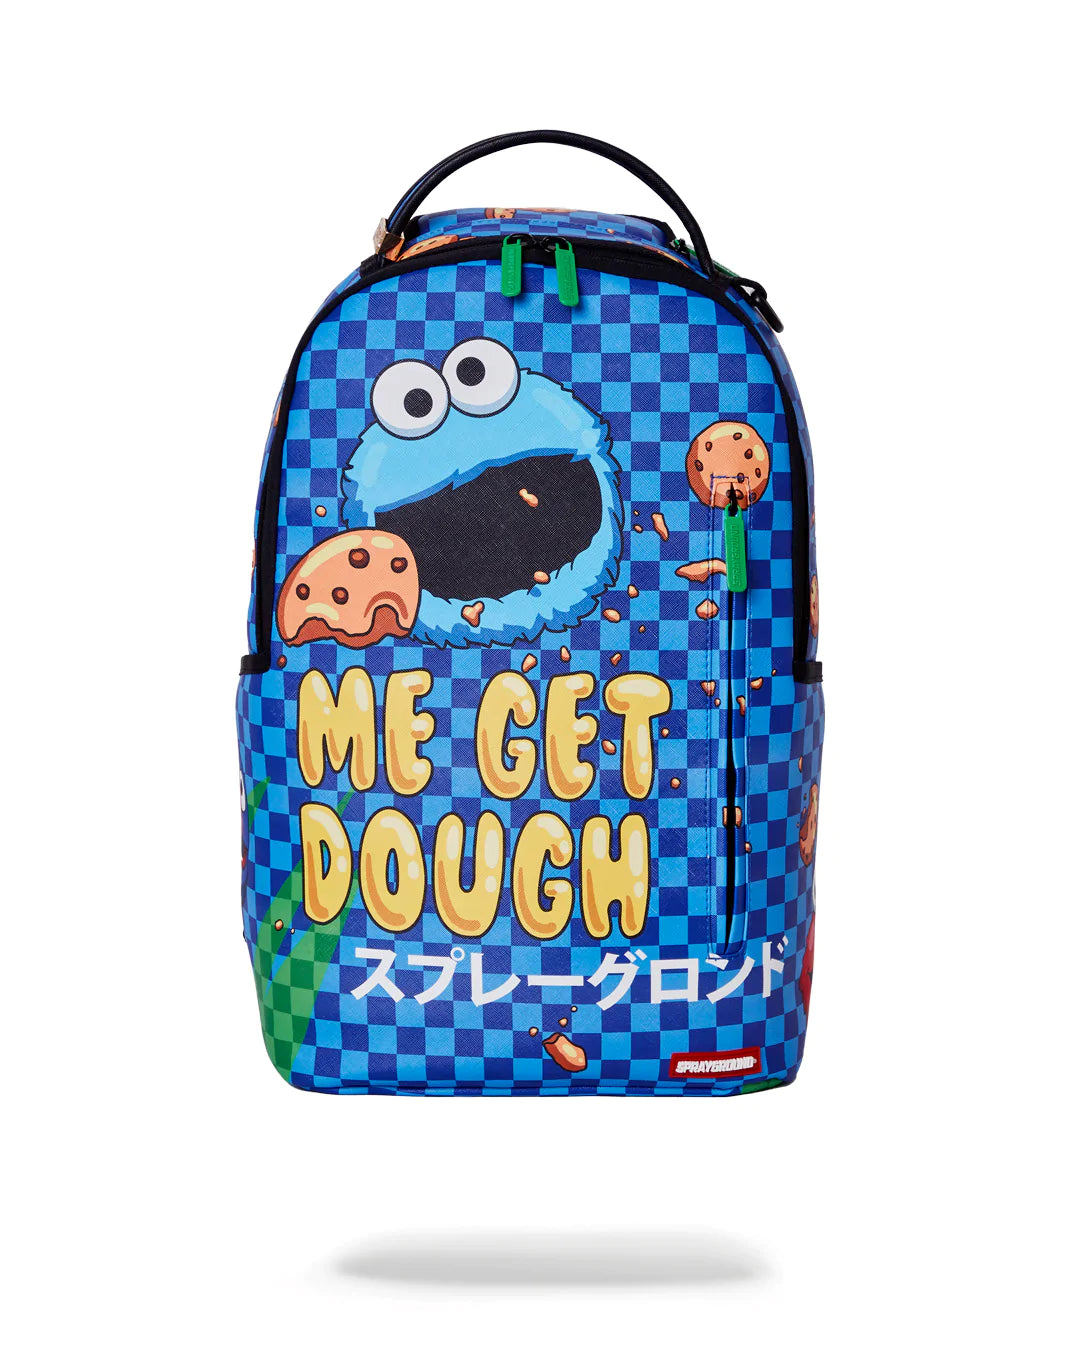 Cookie Monster Me Get Dough Backpack